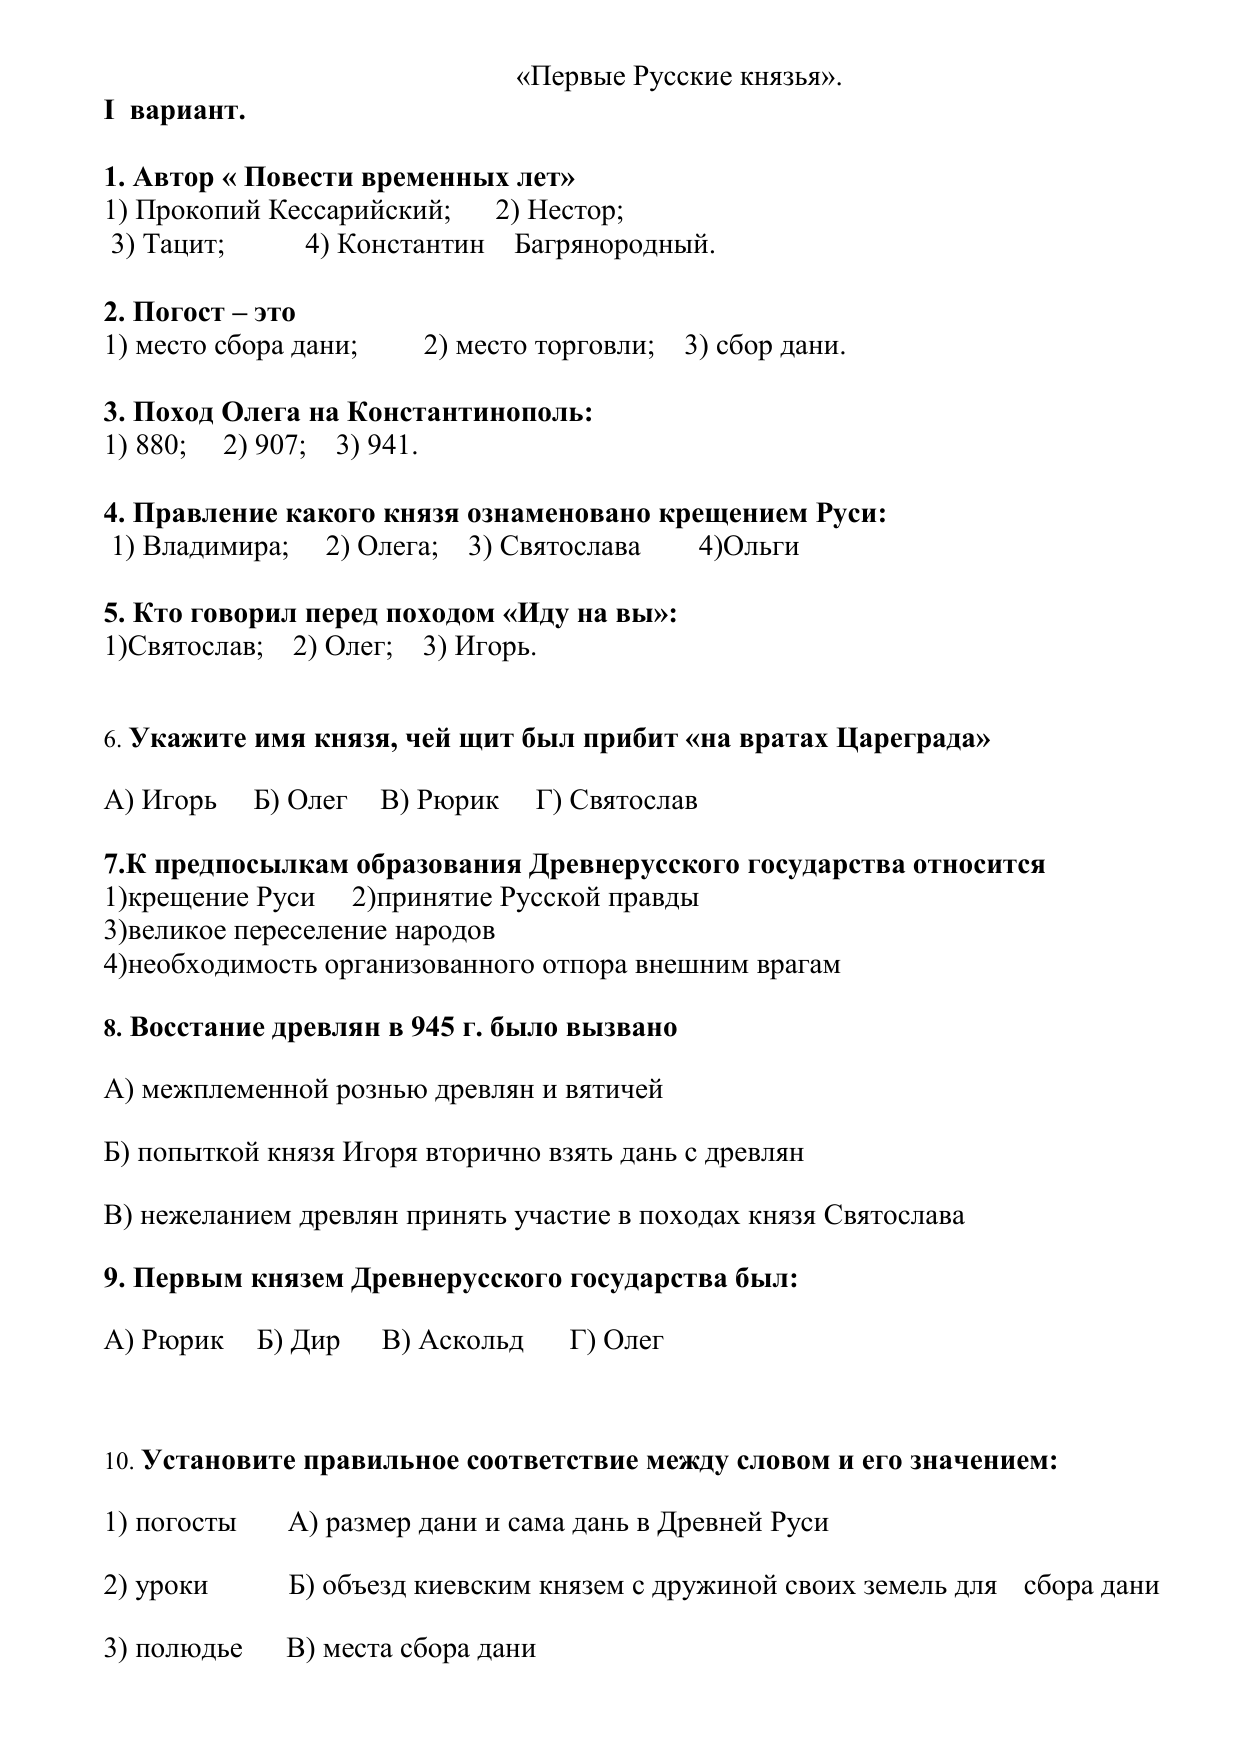 Тест по русским князьям 6 класс